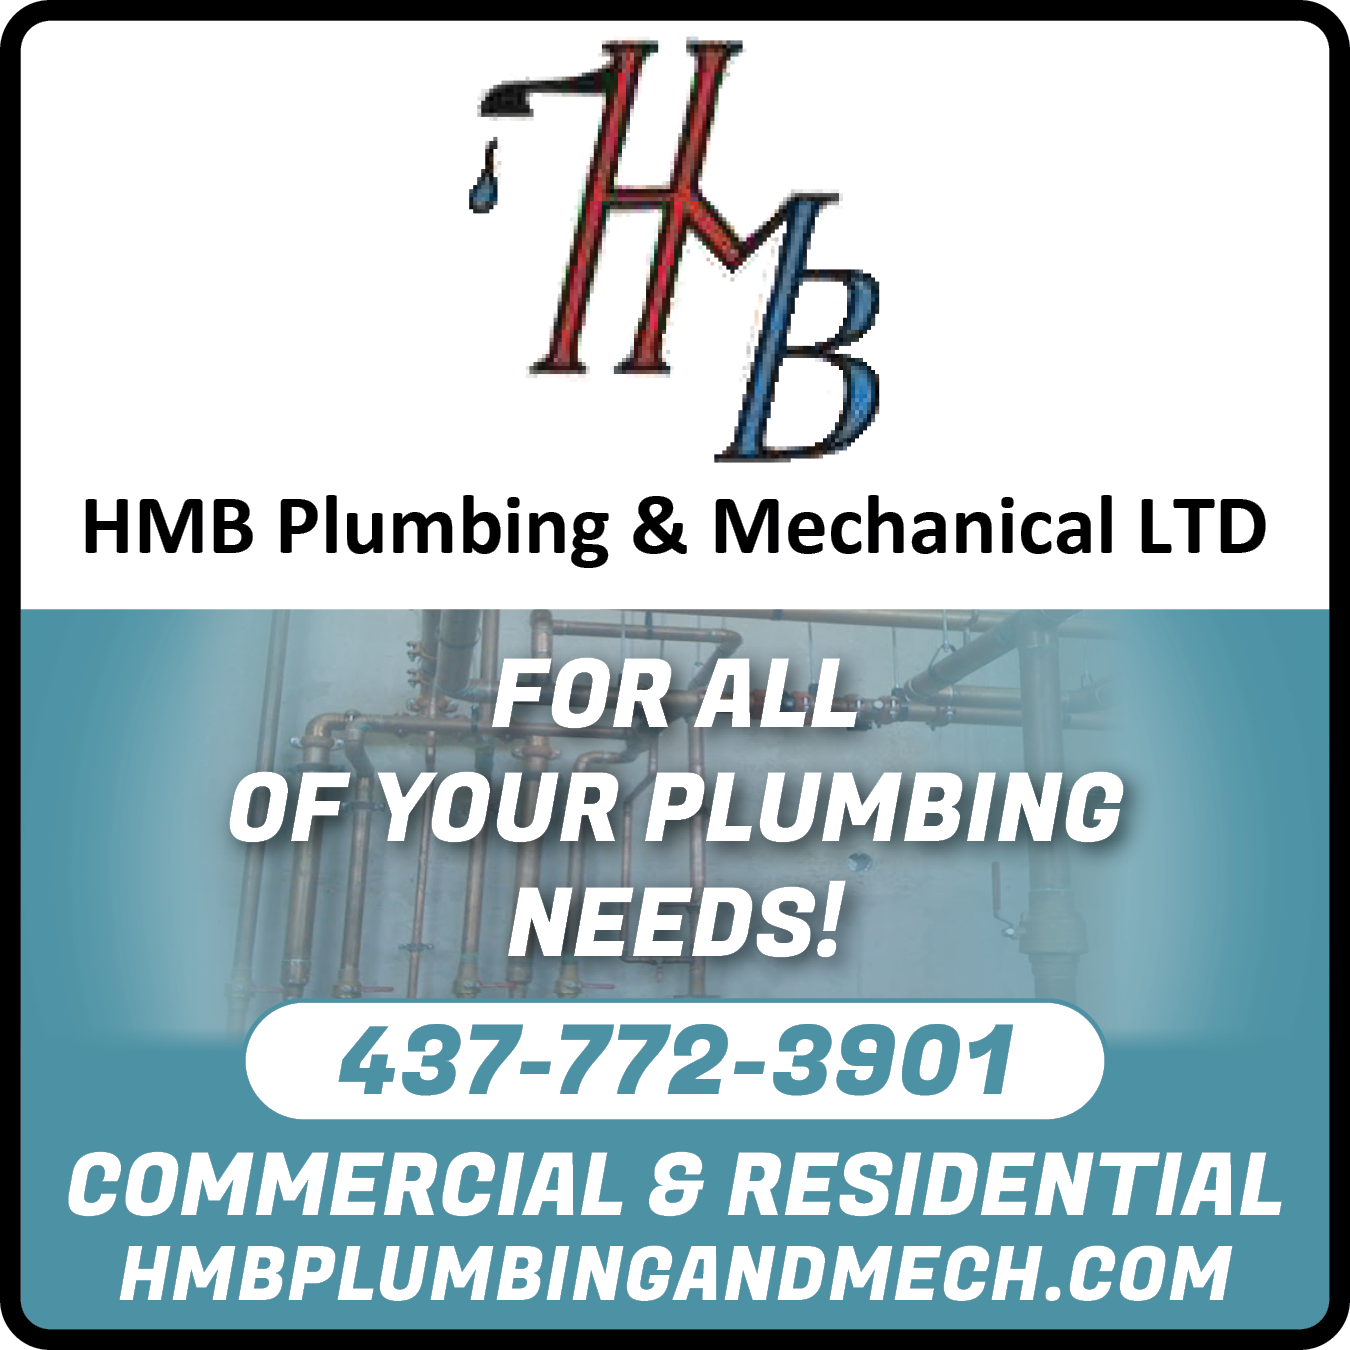 HMB Plumbing and Mechanical